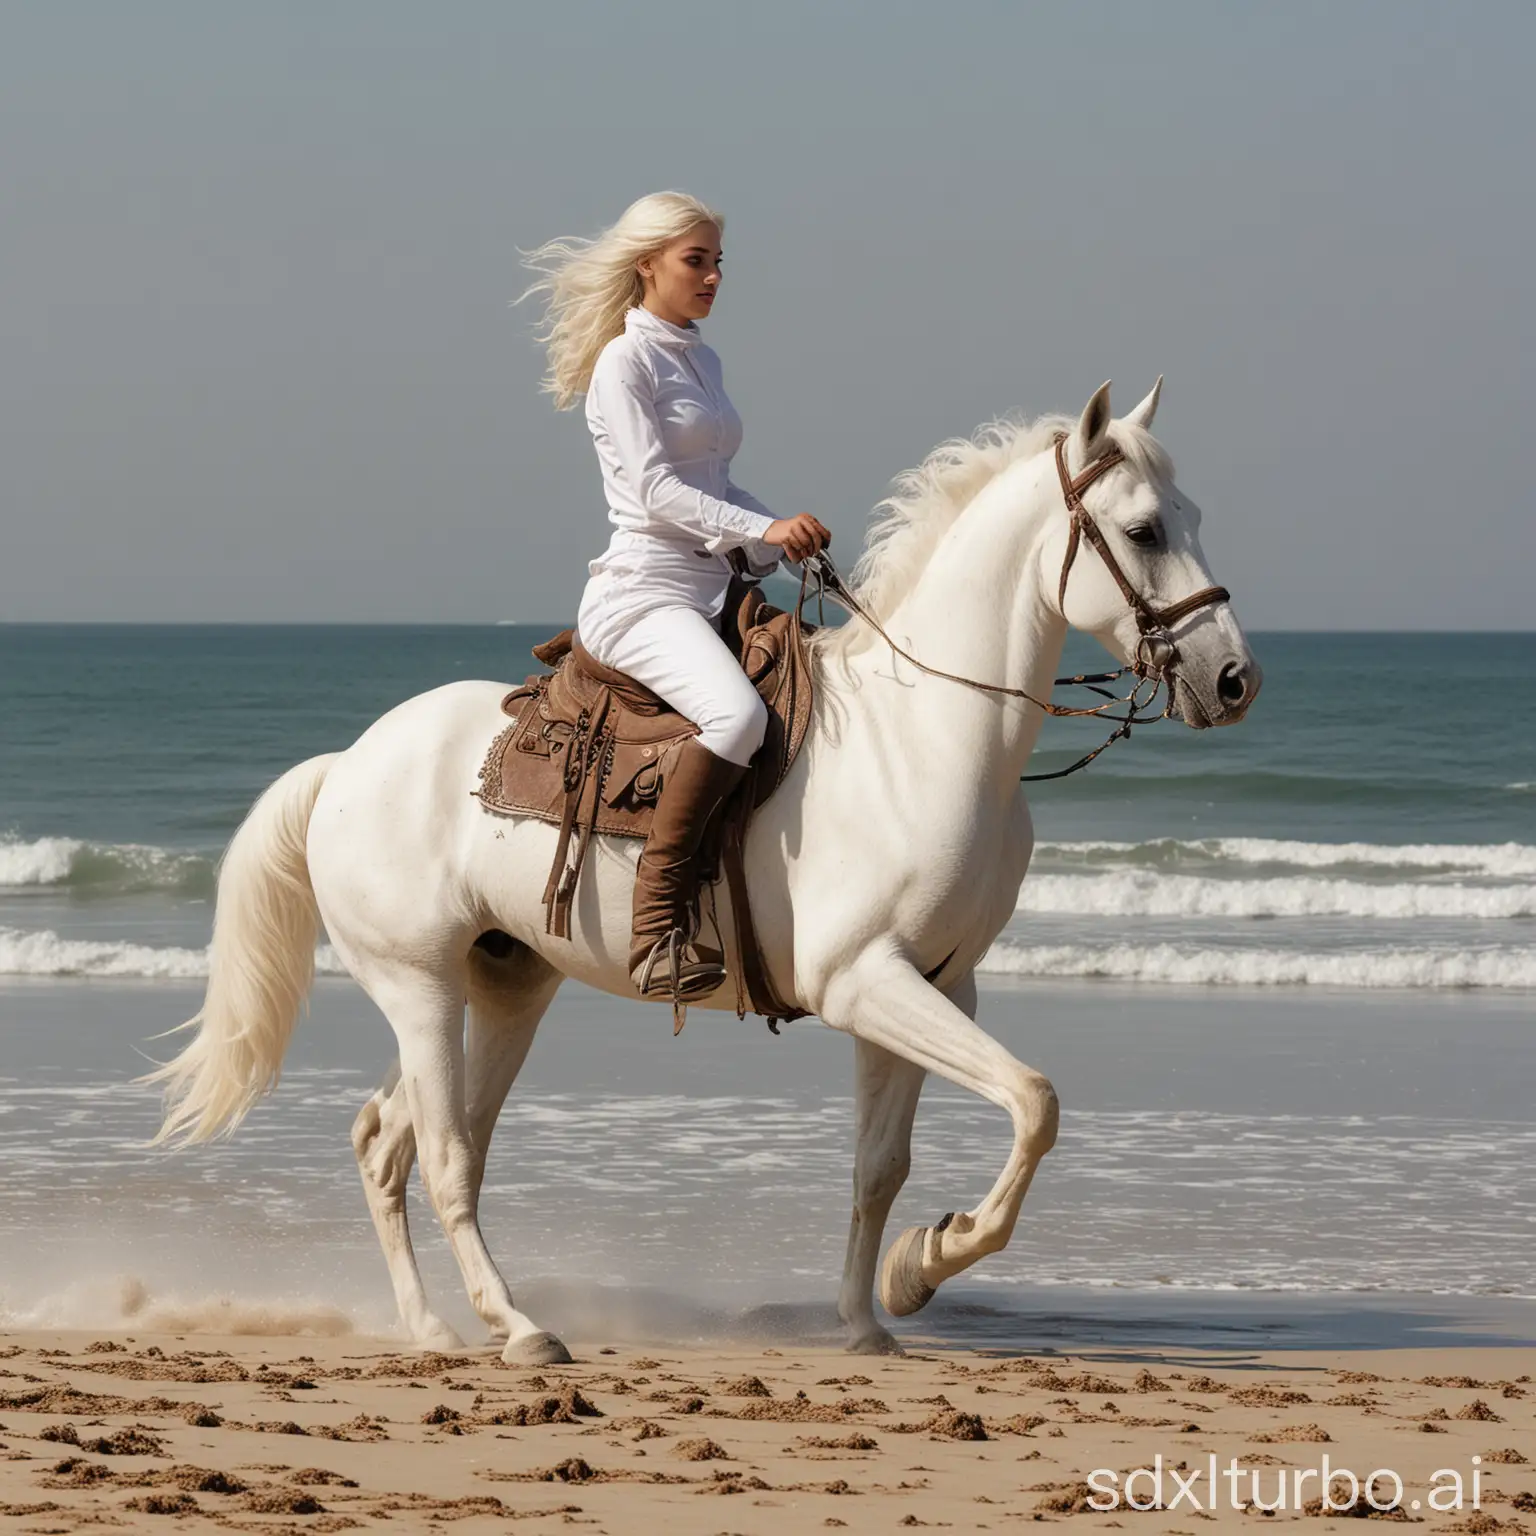 Equestrian-Adventure-Wild-Rider-on-a-White-Arabian-Steed-at-the-Sandy-Beach